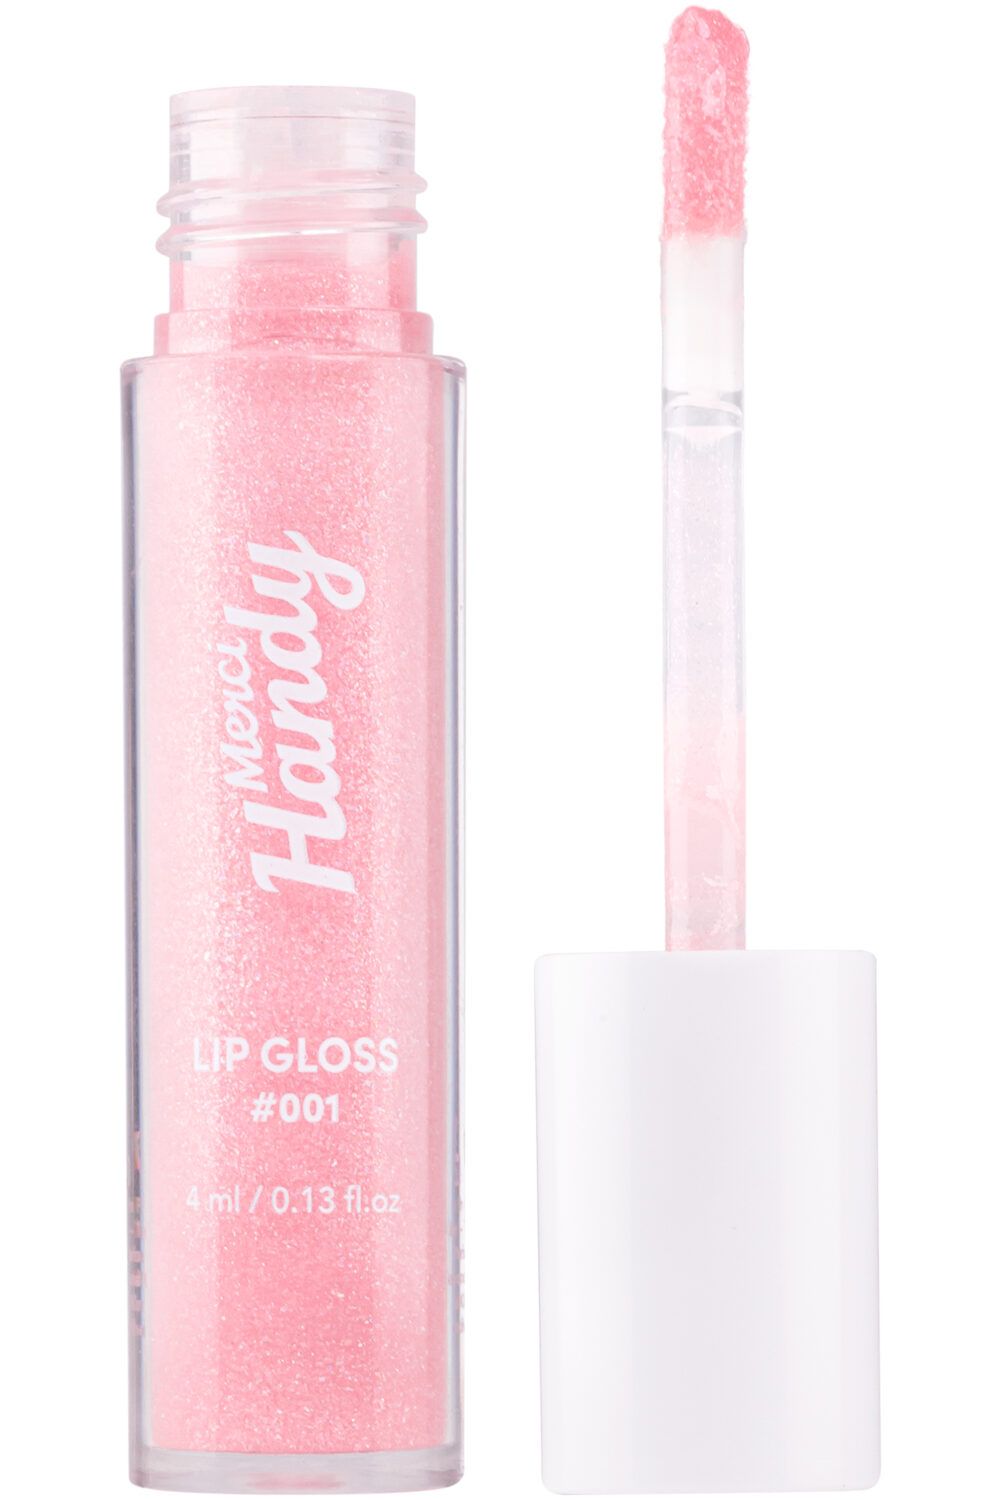 Merci Handy - Lip gloss 4ml